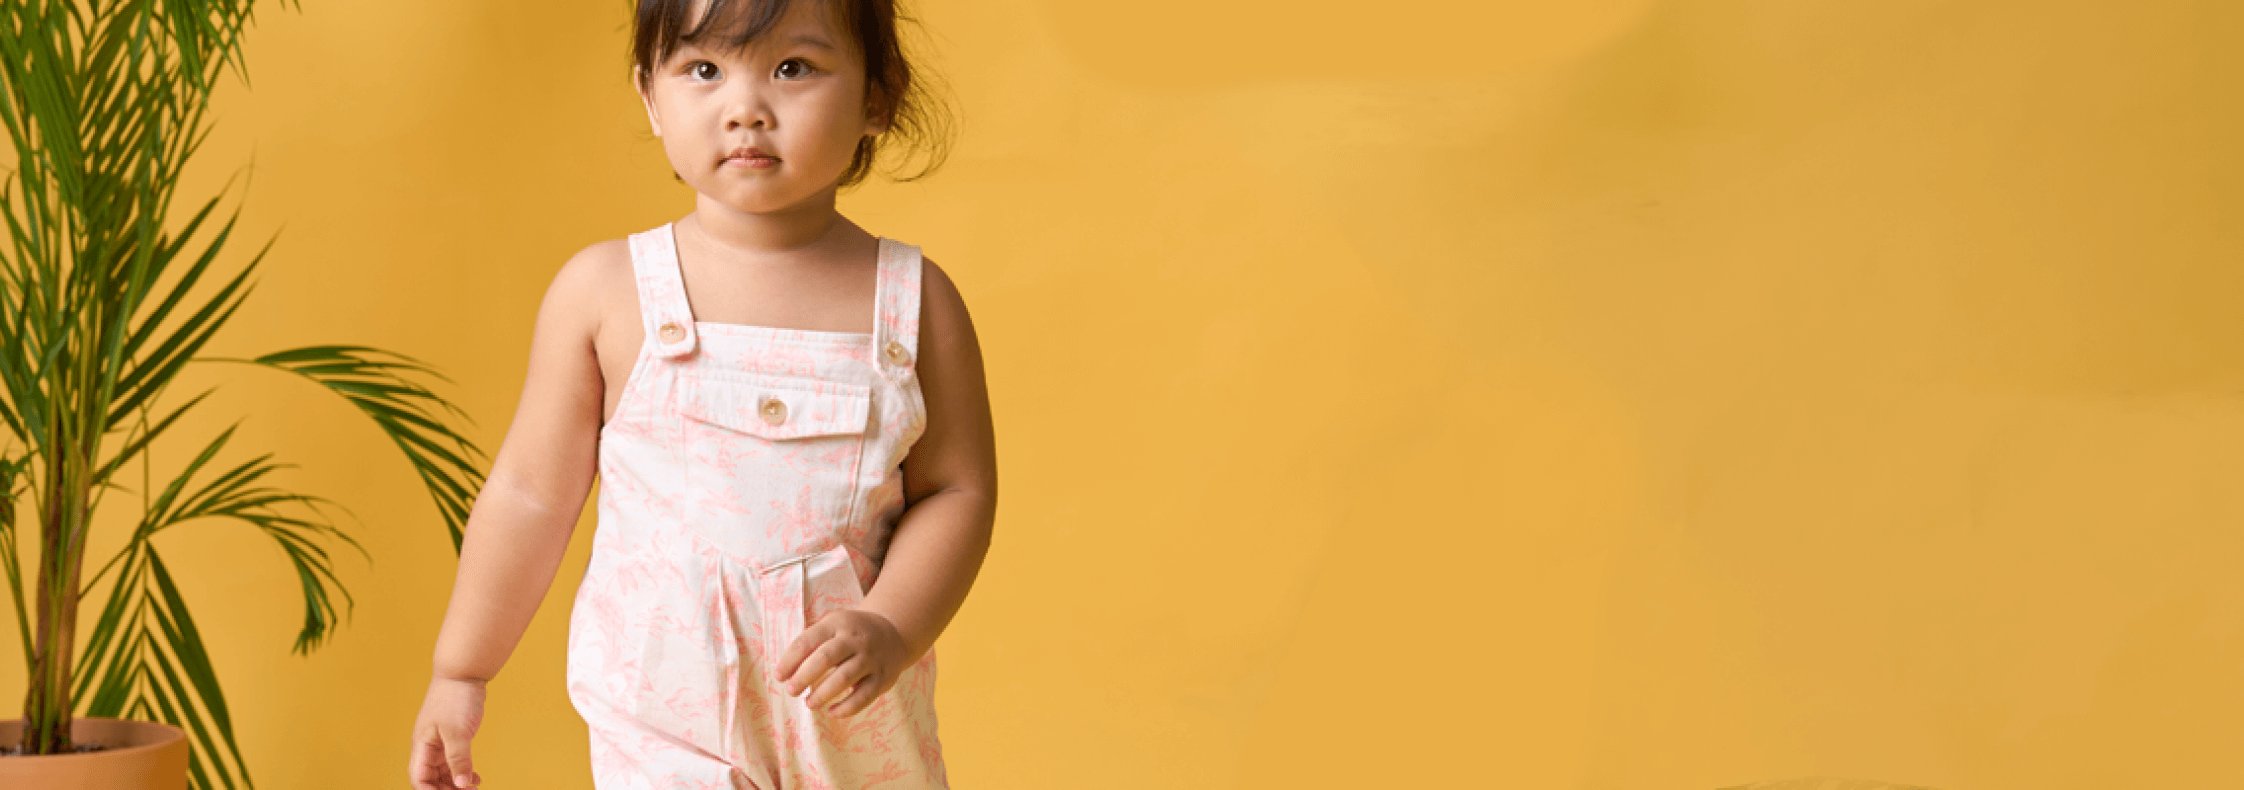 BABY GIRLS JUMPSUITS & PLAYSUITS | Number 1 kids & children's fashion store. Shop online atgingersnaps.com.ph